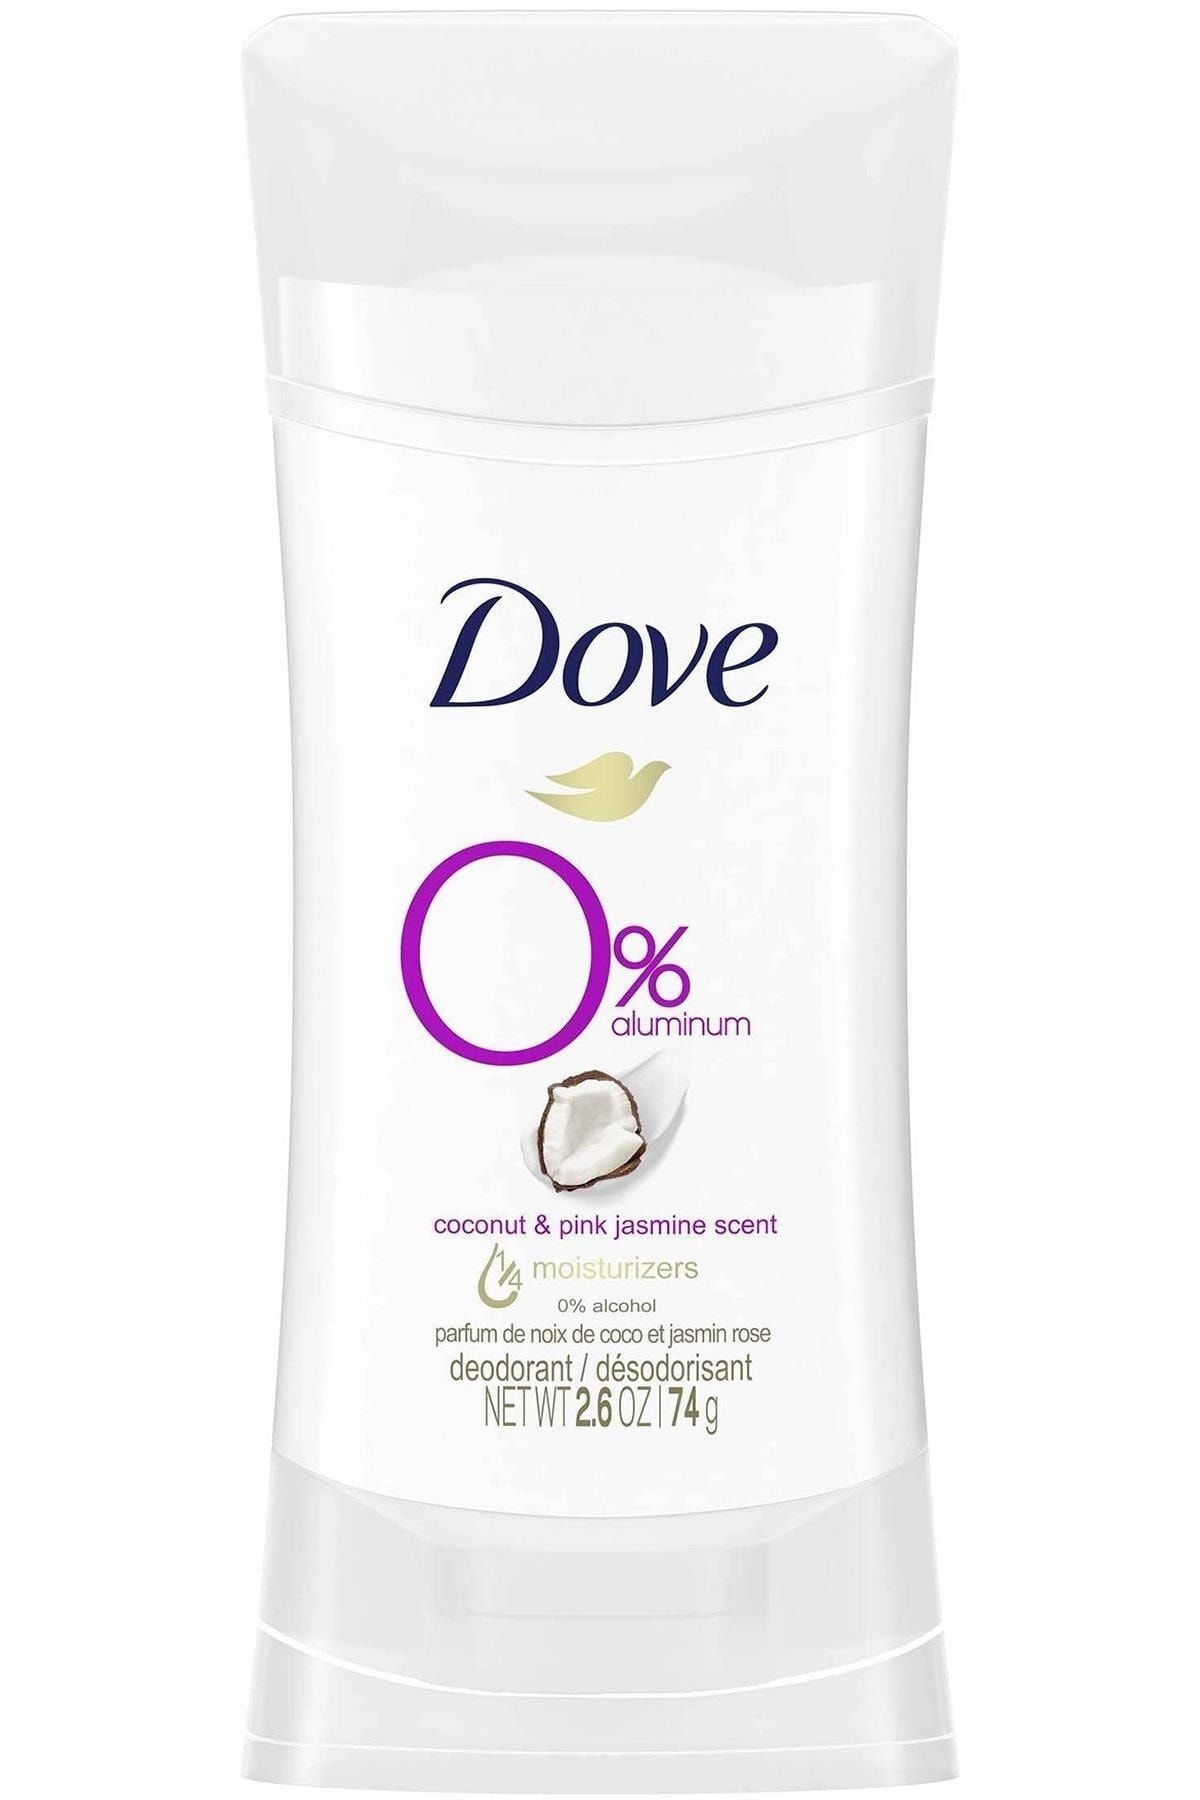 Dove 0% Aluminum Coconut & Pink Jasmine Deodorant 74gr